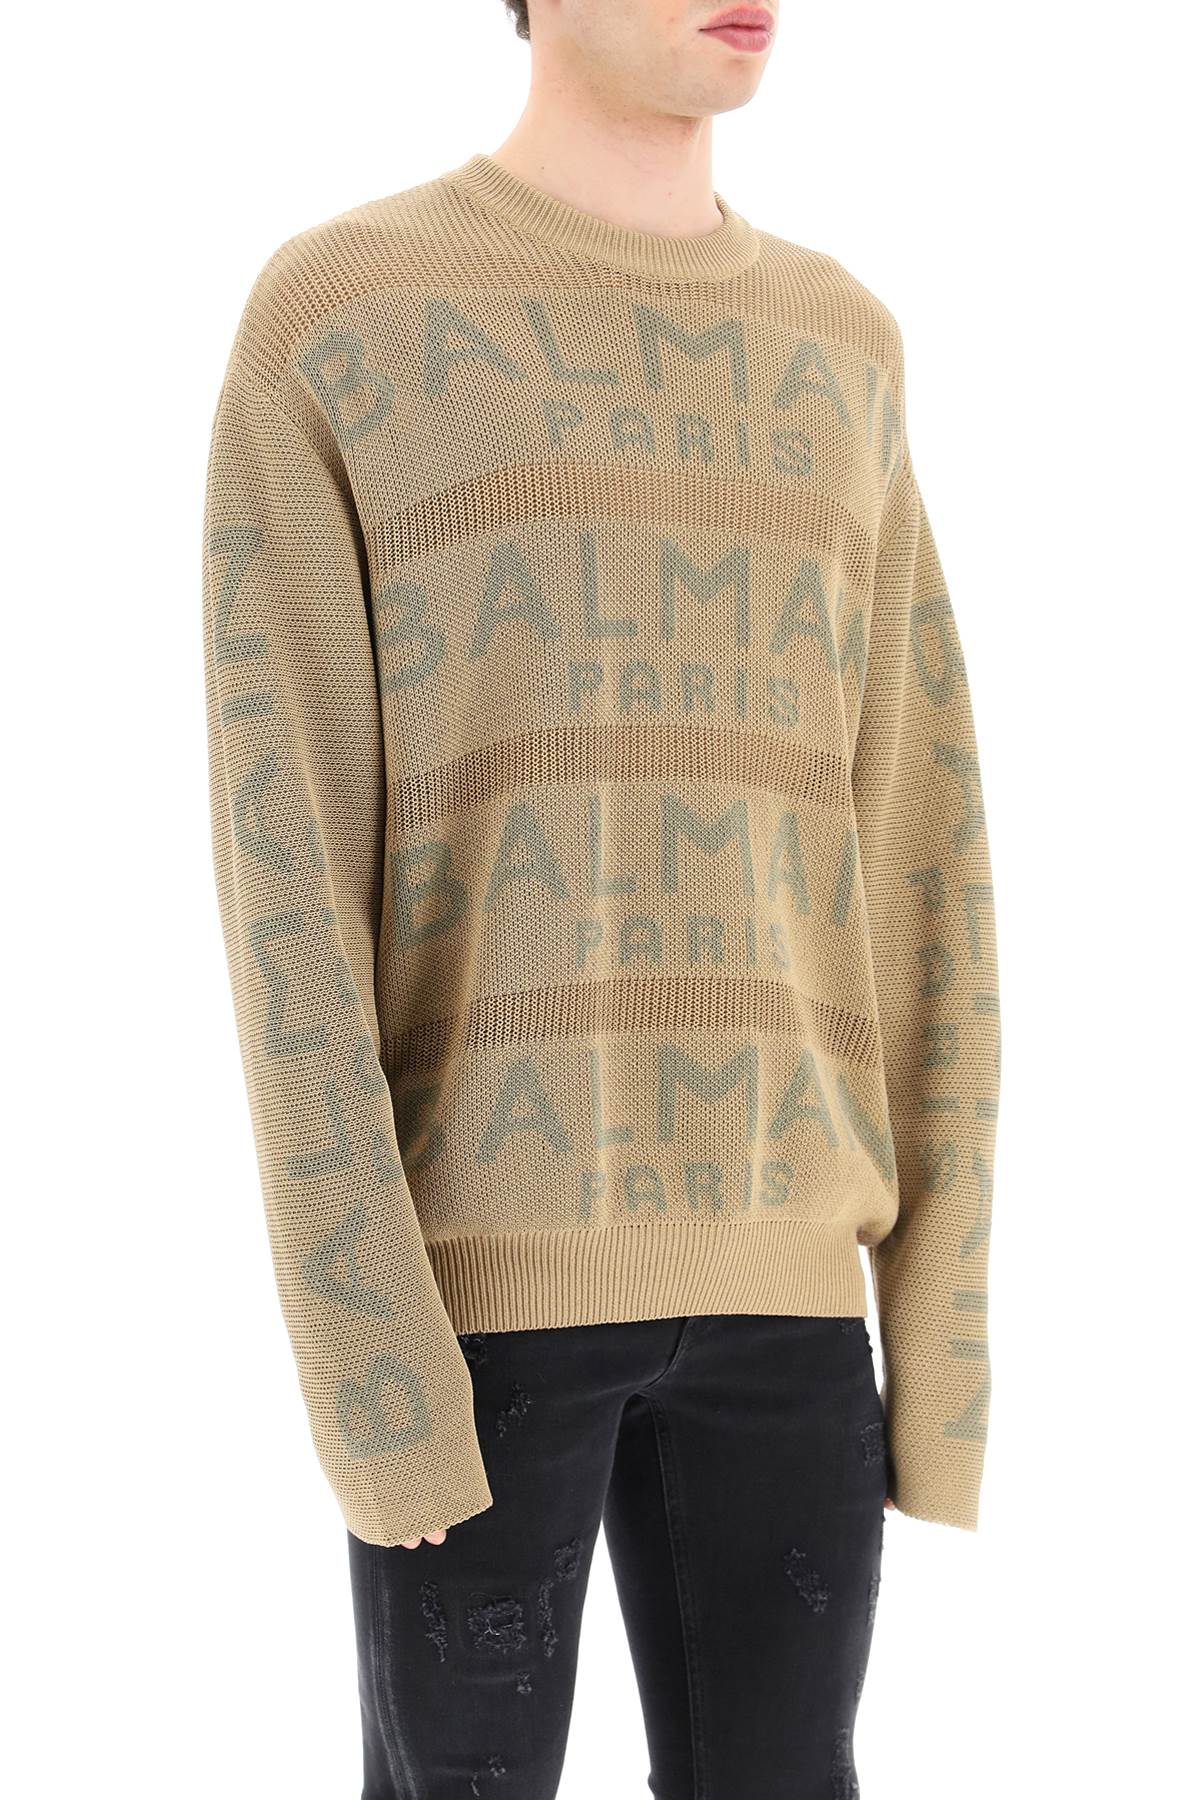 Balmain oversized cotton logo sweater